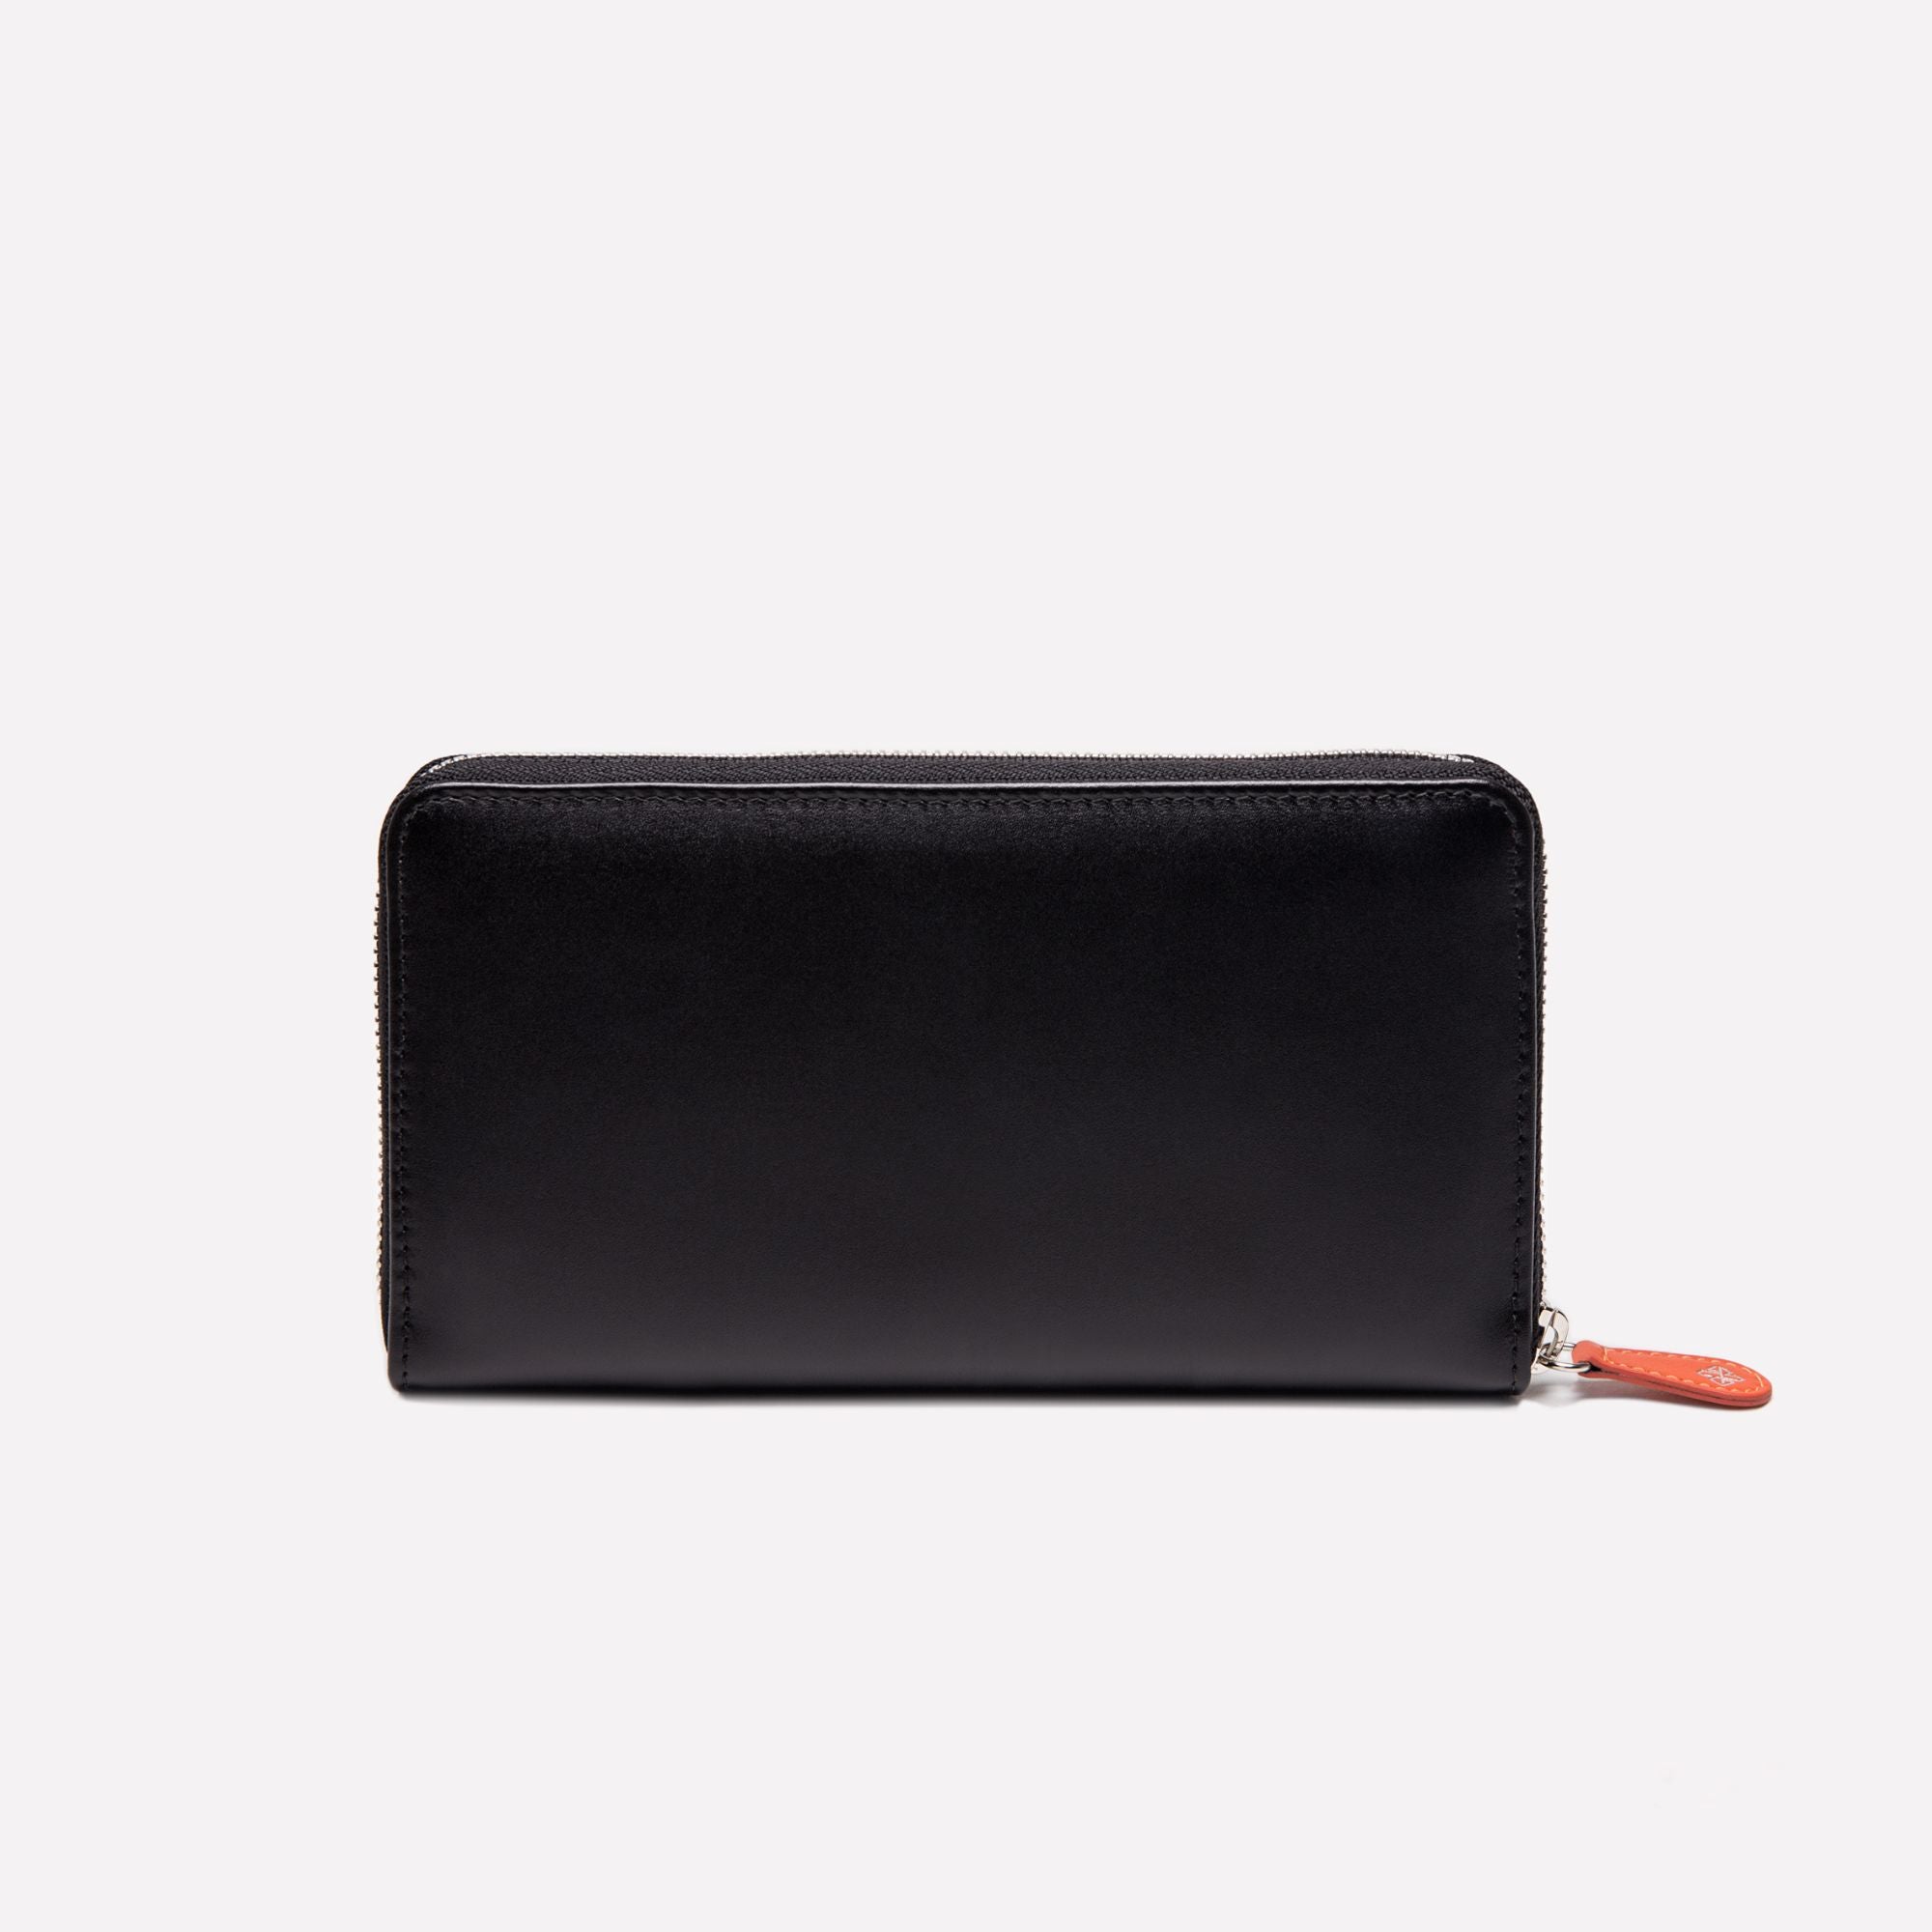 Michael Kors Large Zip Around Wallet Crossbody Bag Handbag Purse Blue | eBay